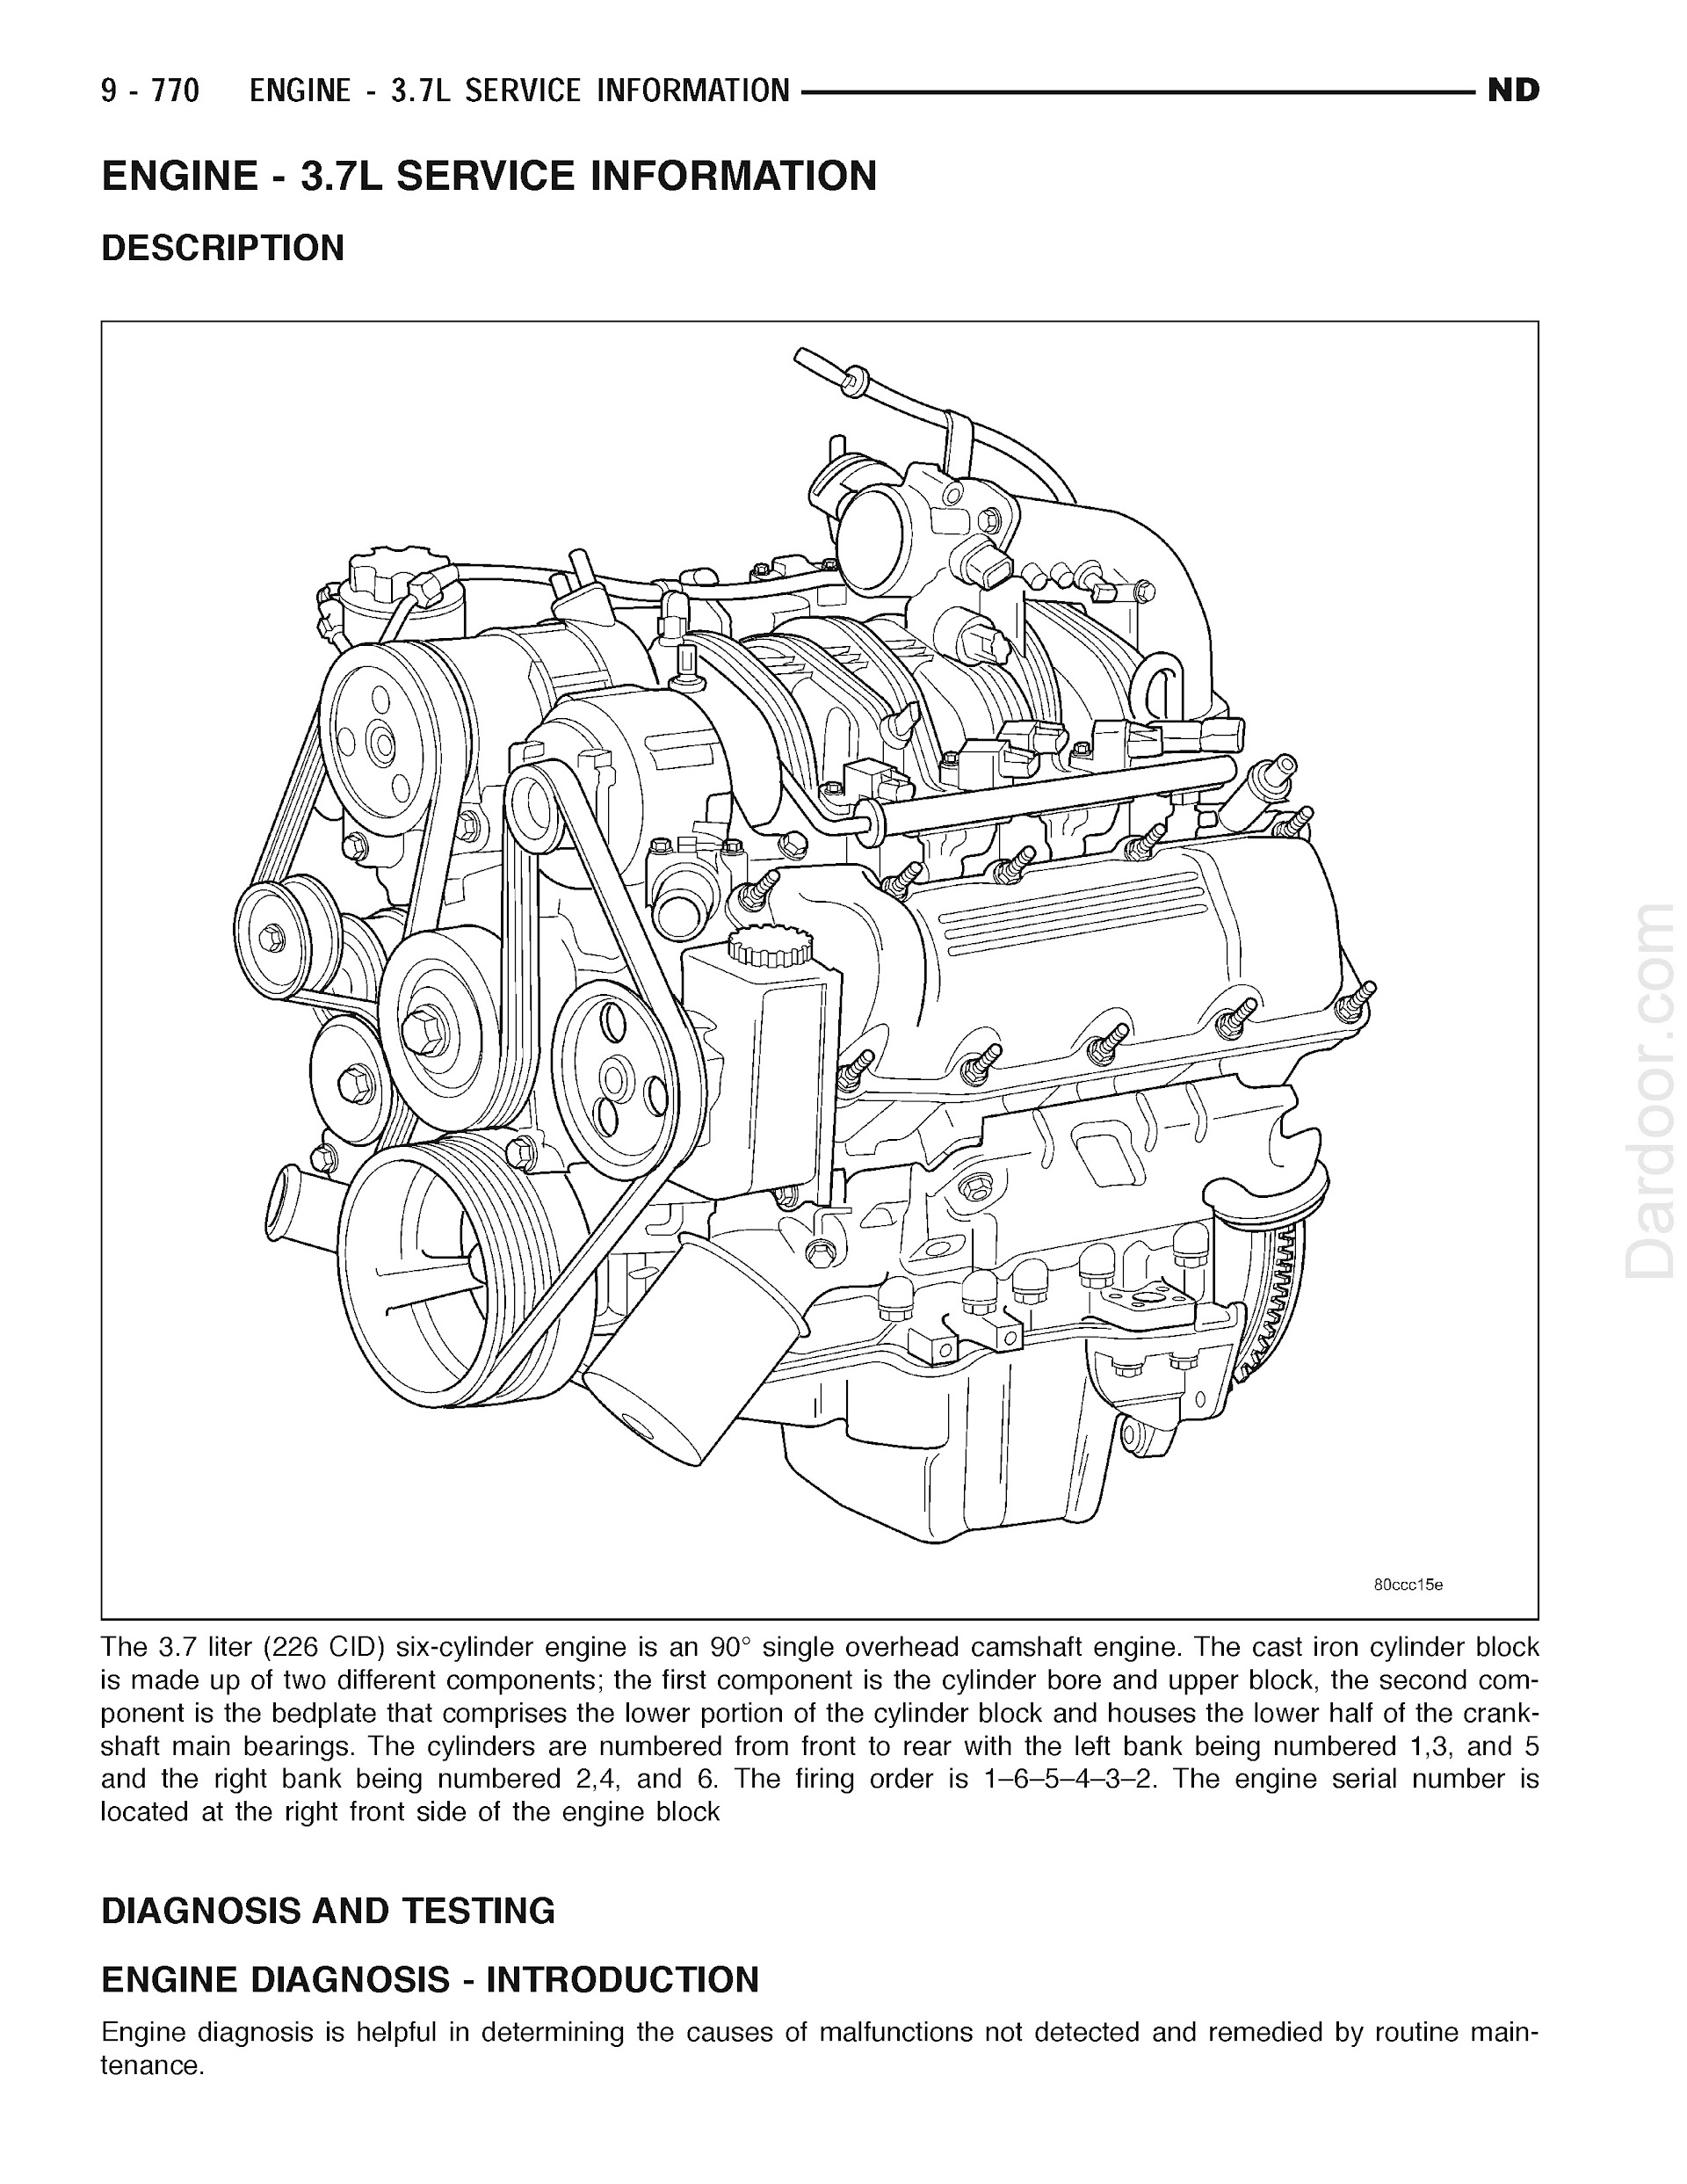 2005 Dodge Dakota Repair Manual, Engine 3.7L Service Information